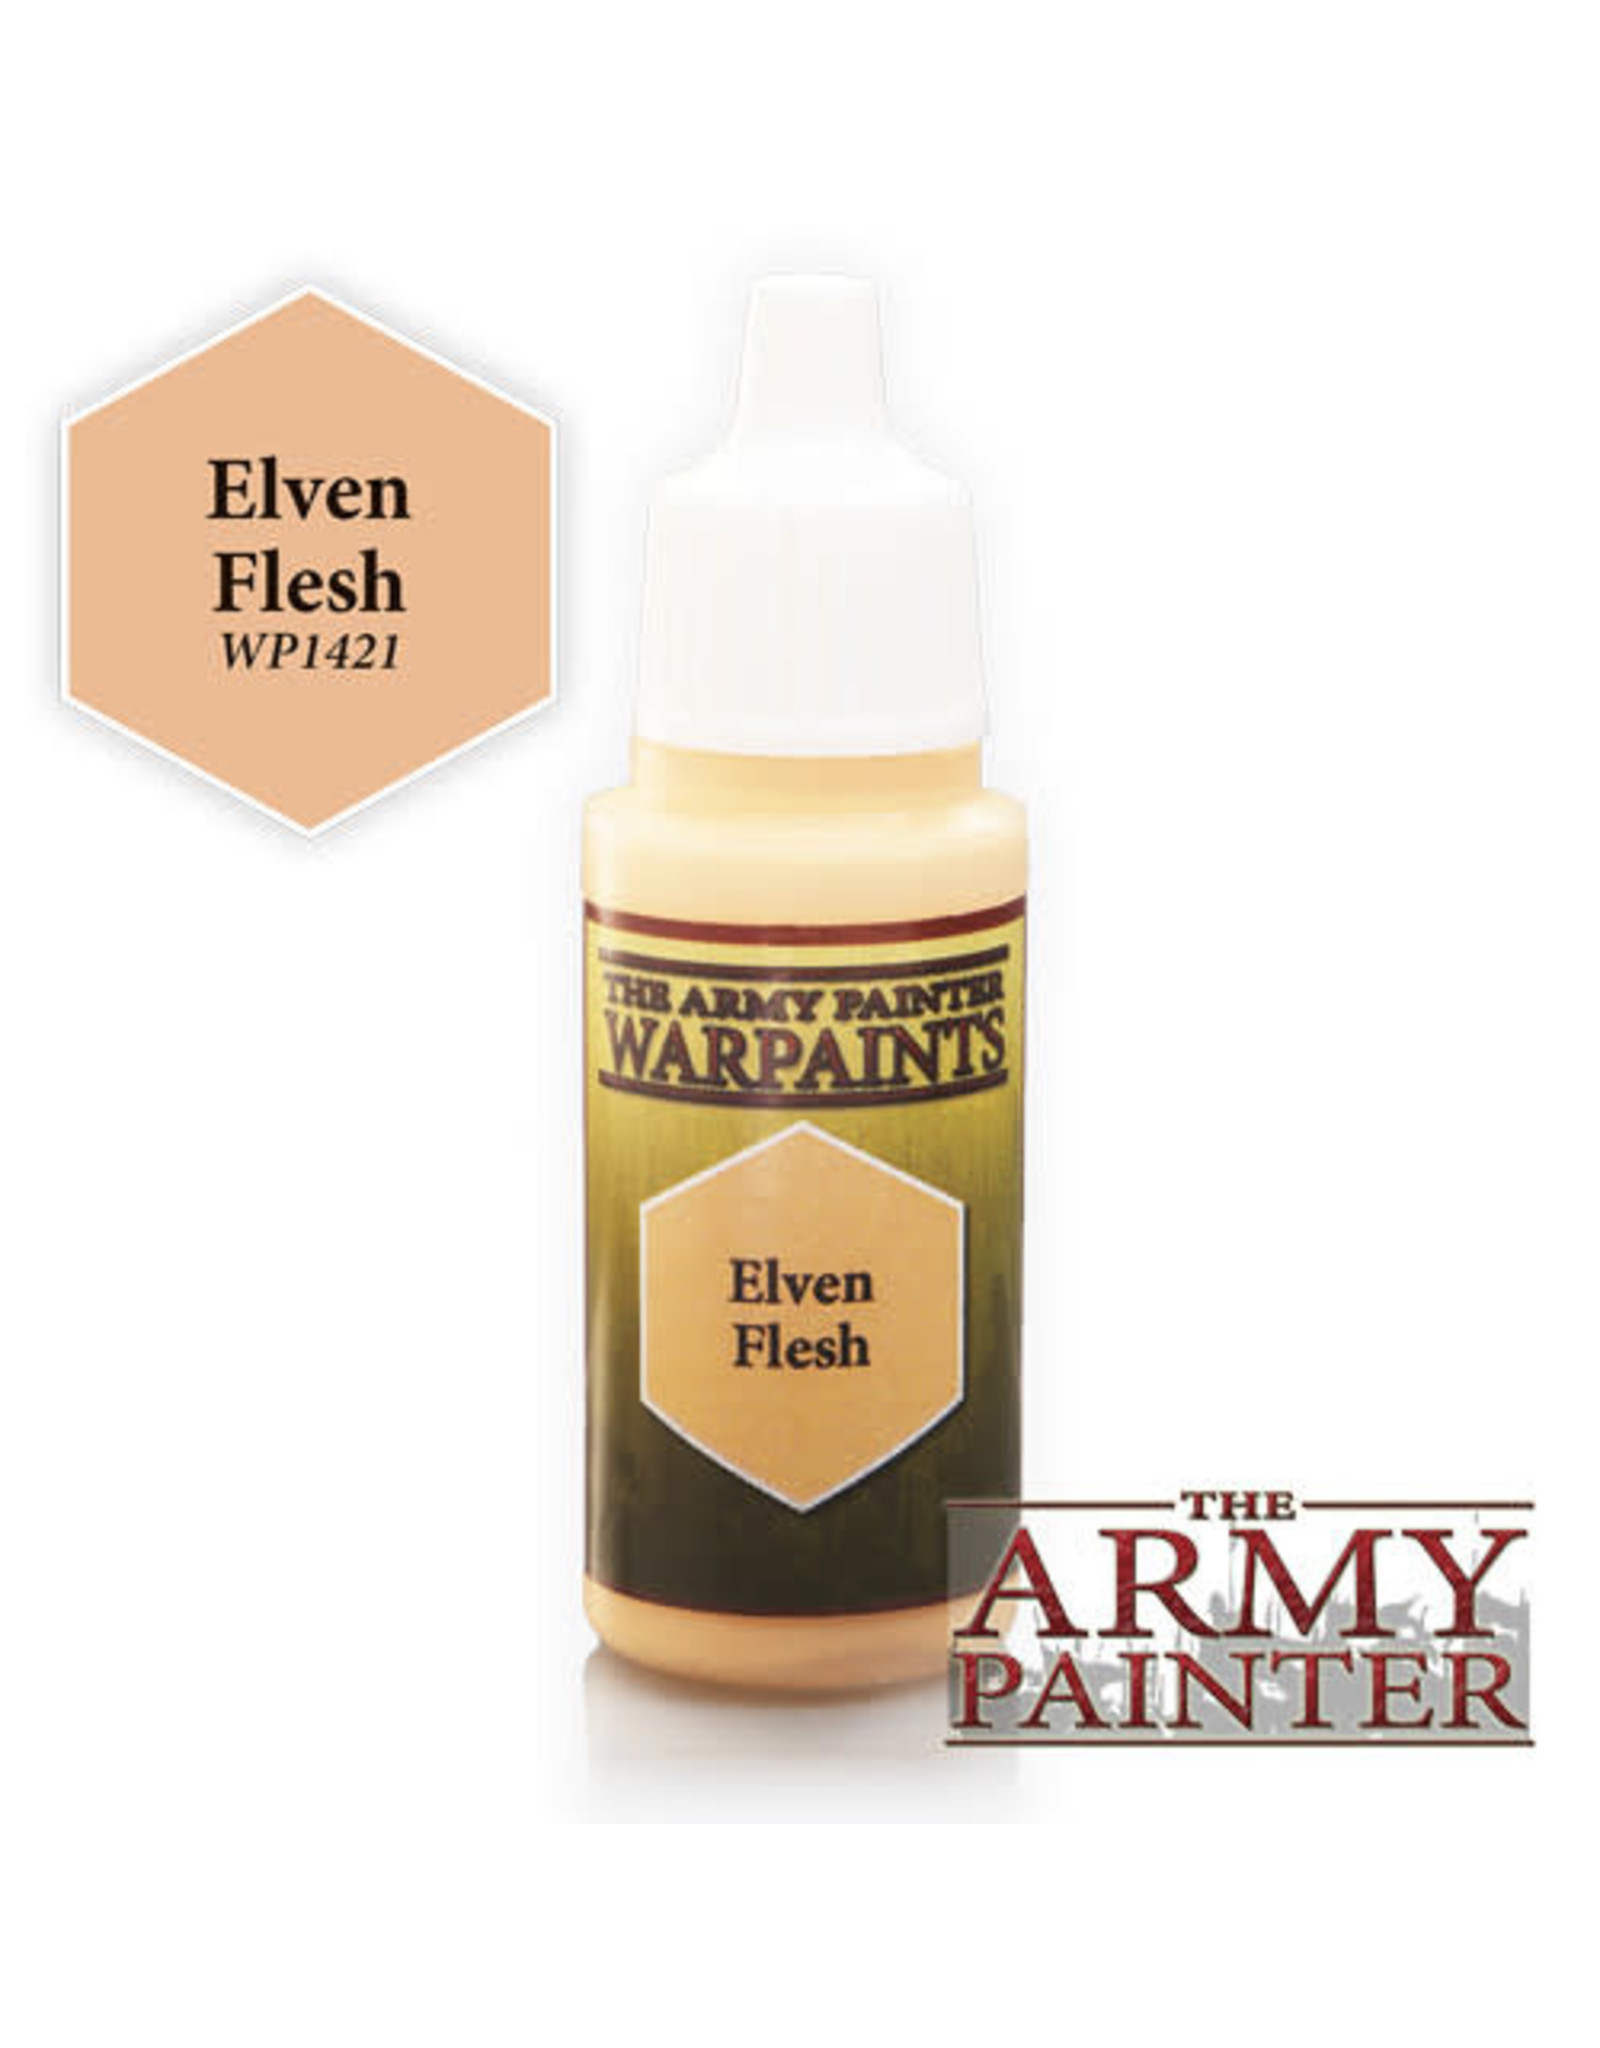 The Army Painter Warpaints: Elven Flesh 18ml